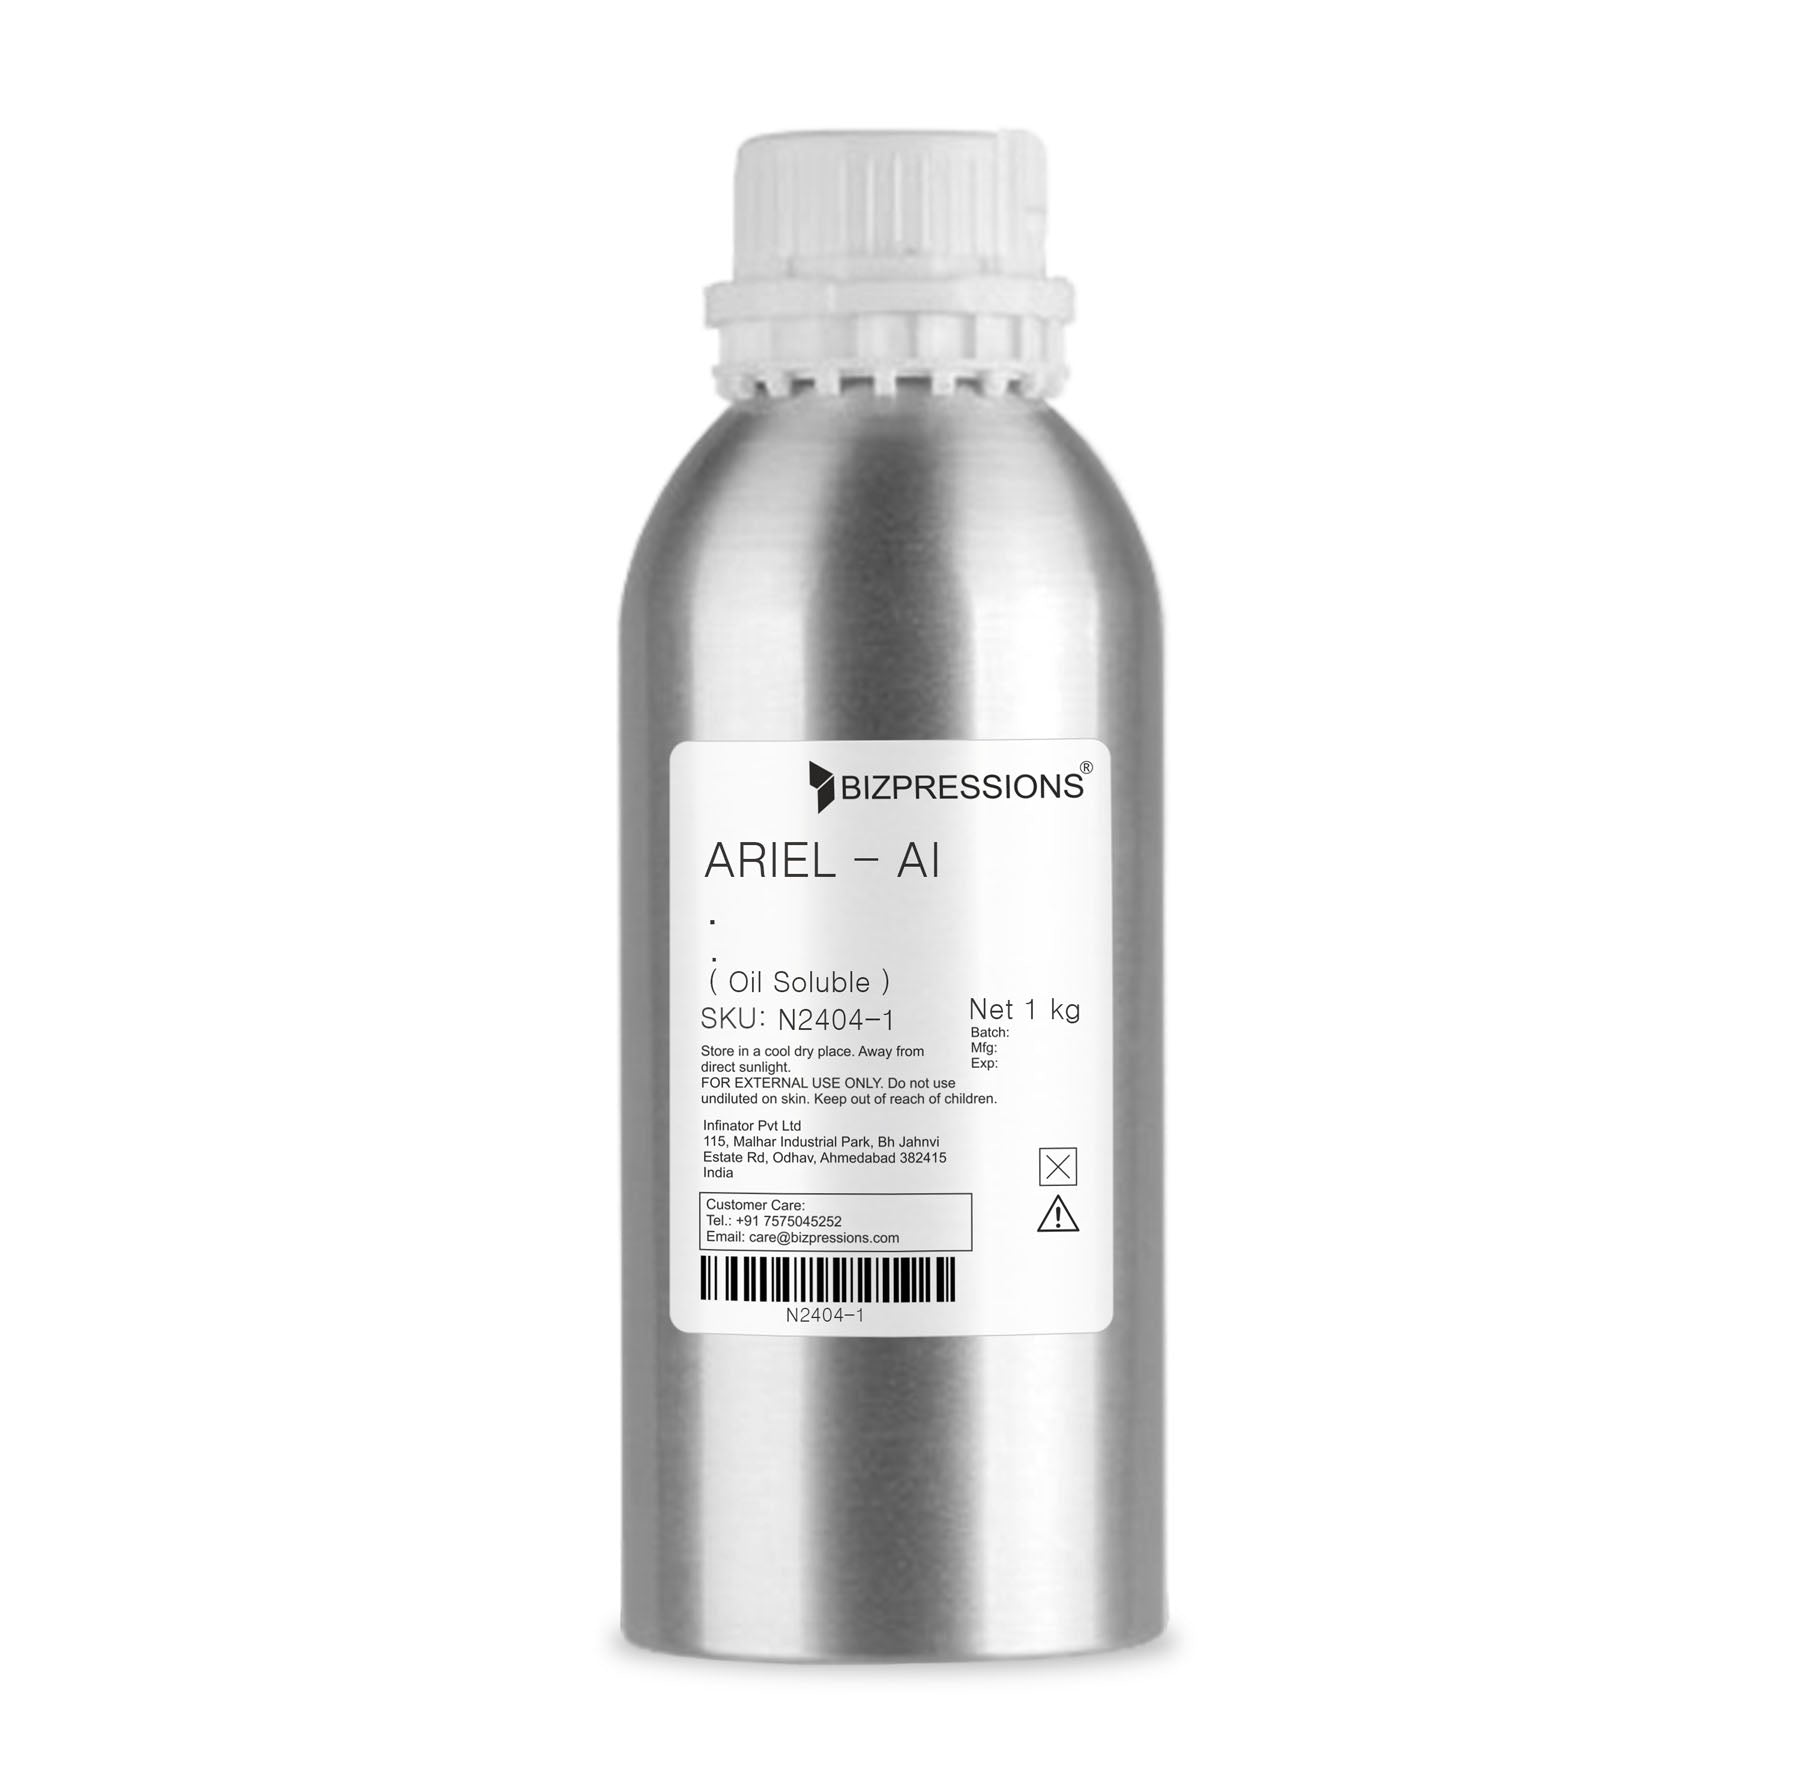 ARIEL - AI - Fragrance ( Oil Soluble ) - 1 kg